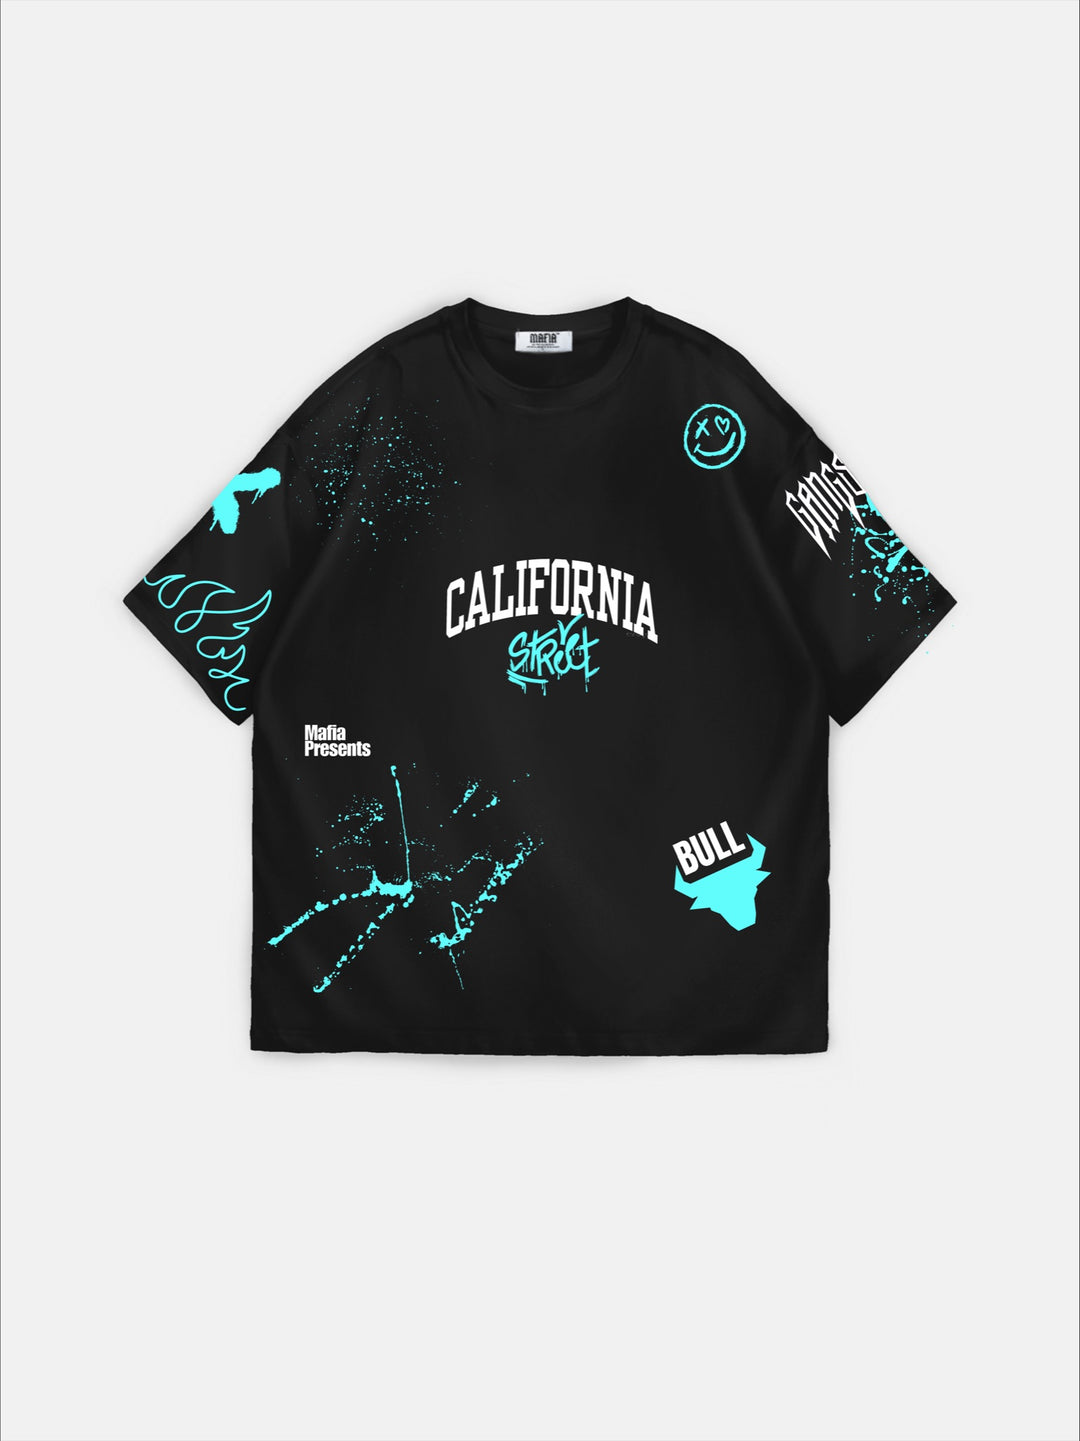 Oversize California Graffiti T-Shirt - Black and Turquoise